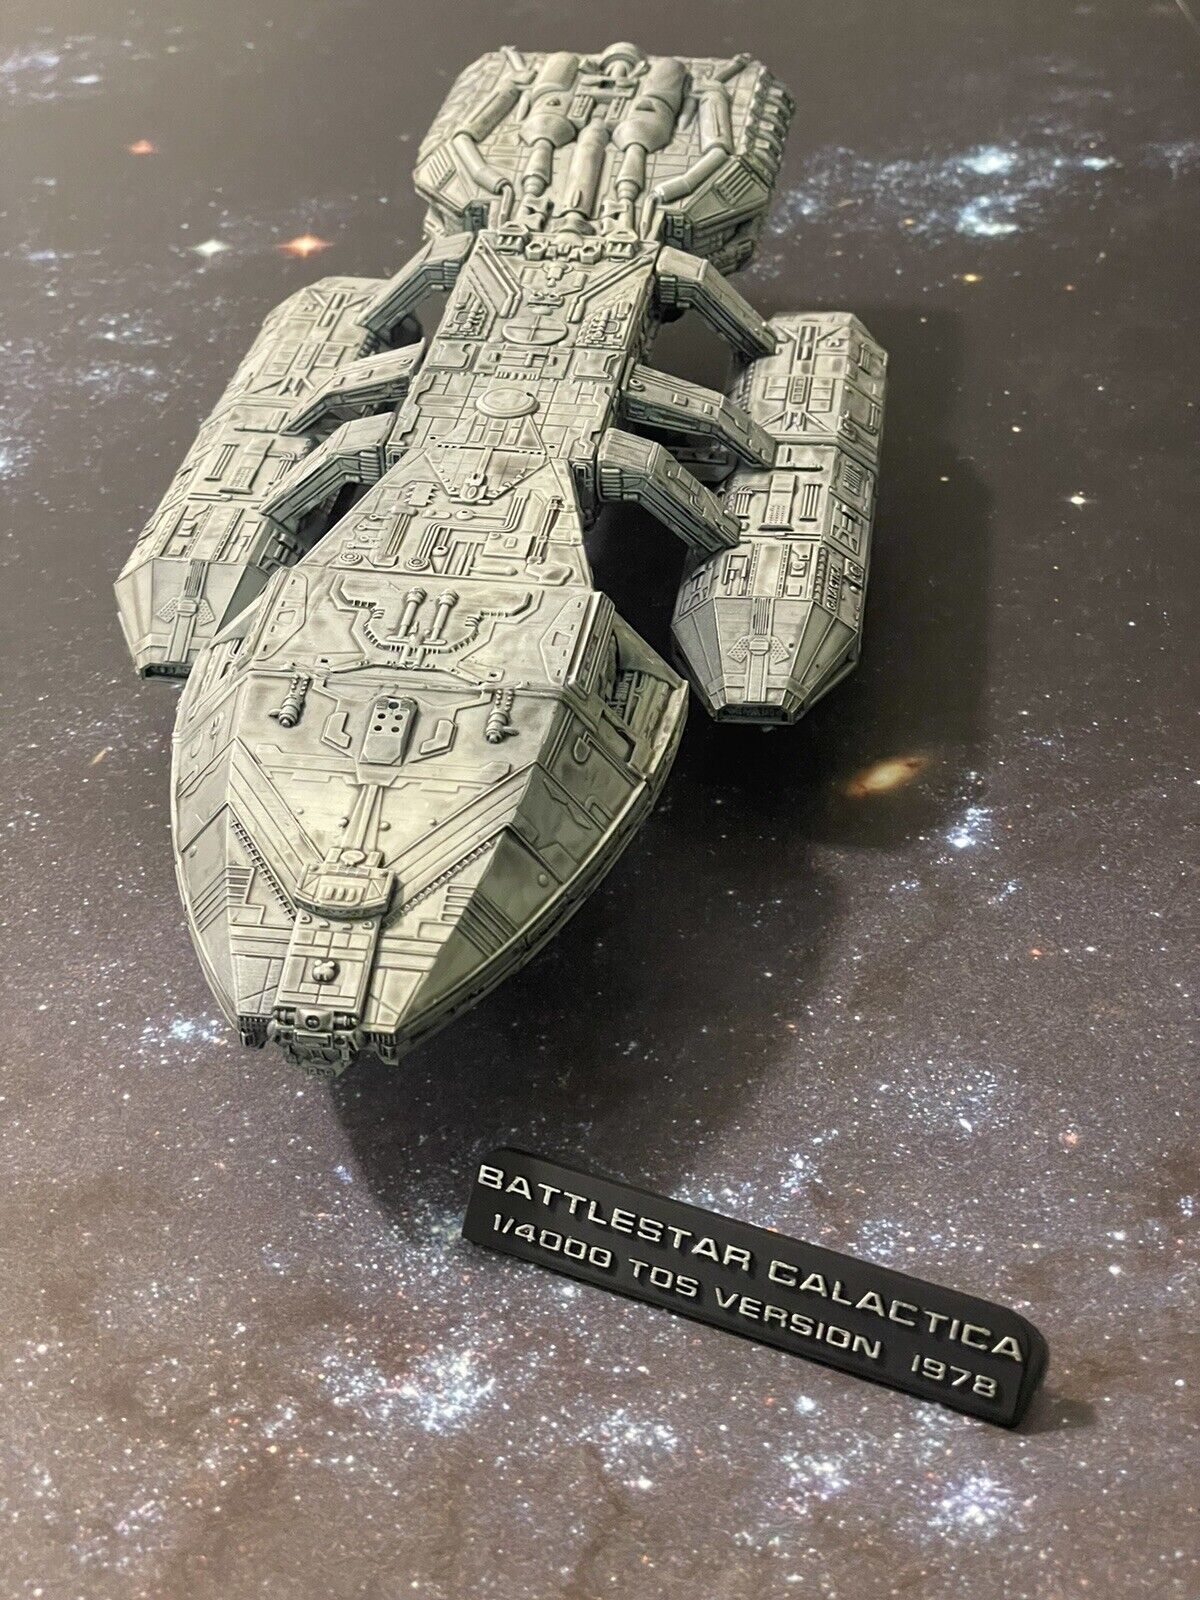 Battlestar Galactica - 12.4” TOS series version Hi-res FanArt 3D model - painted